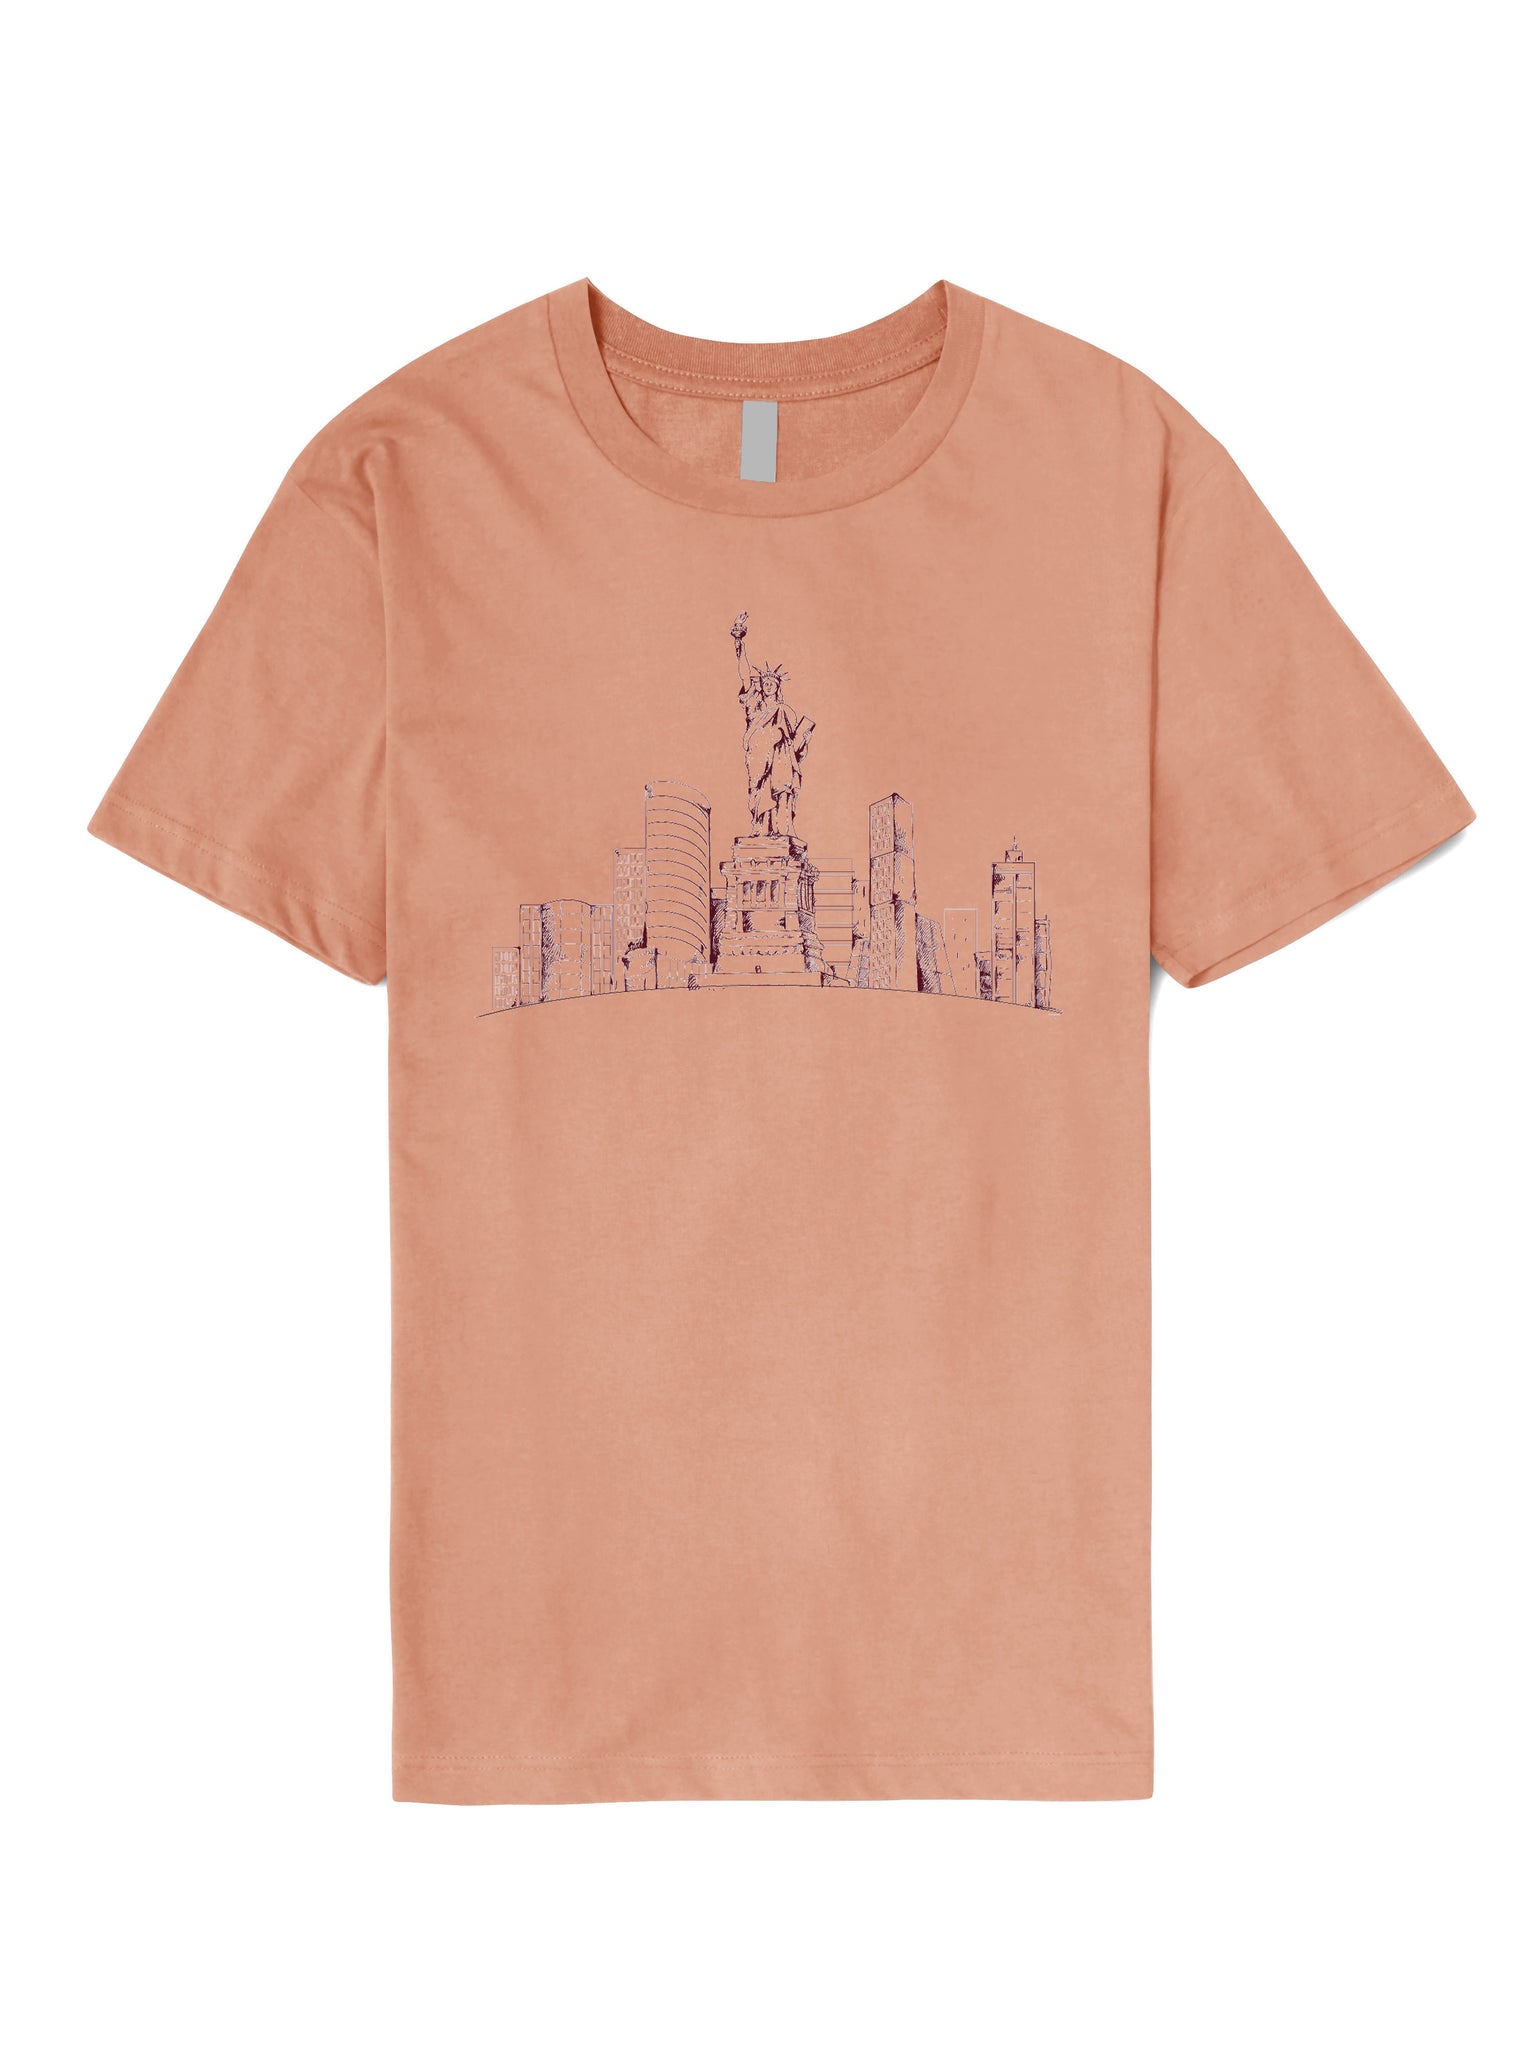 Tank Tops and New Graphic Beyond T-Shirt & York Shirt City T - Skyline Hat |